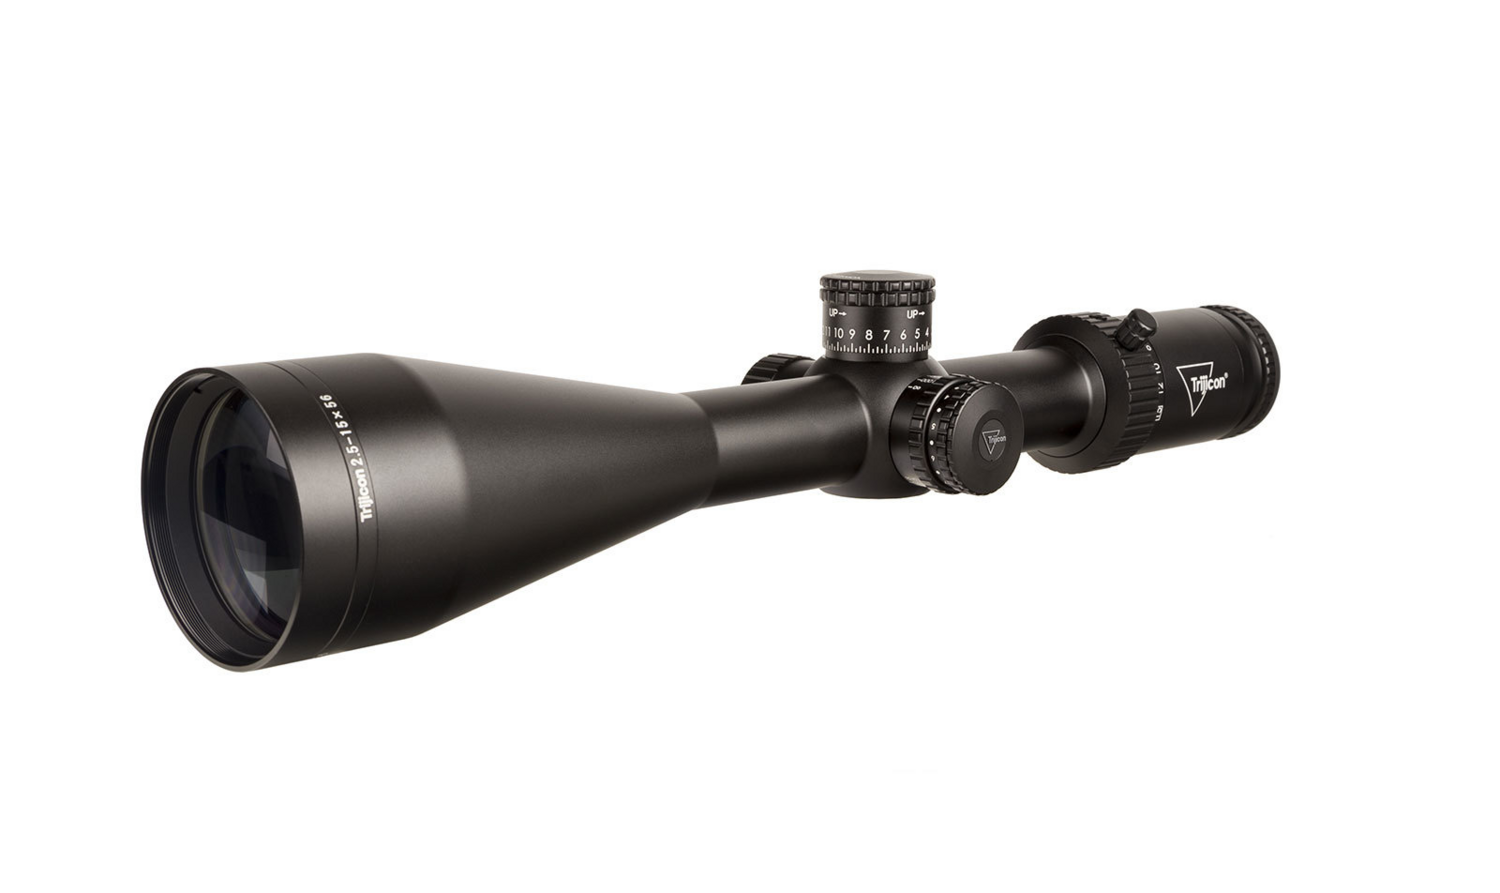 Credo HX SFP Riflescope w/ Exposed Elevation Adjuster
Trijicon